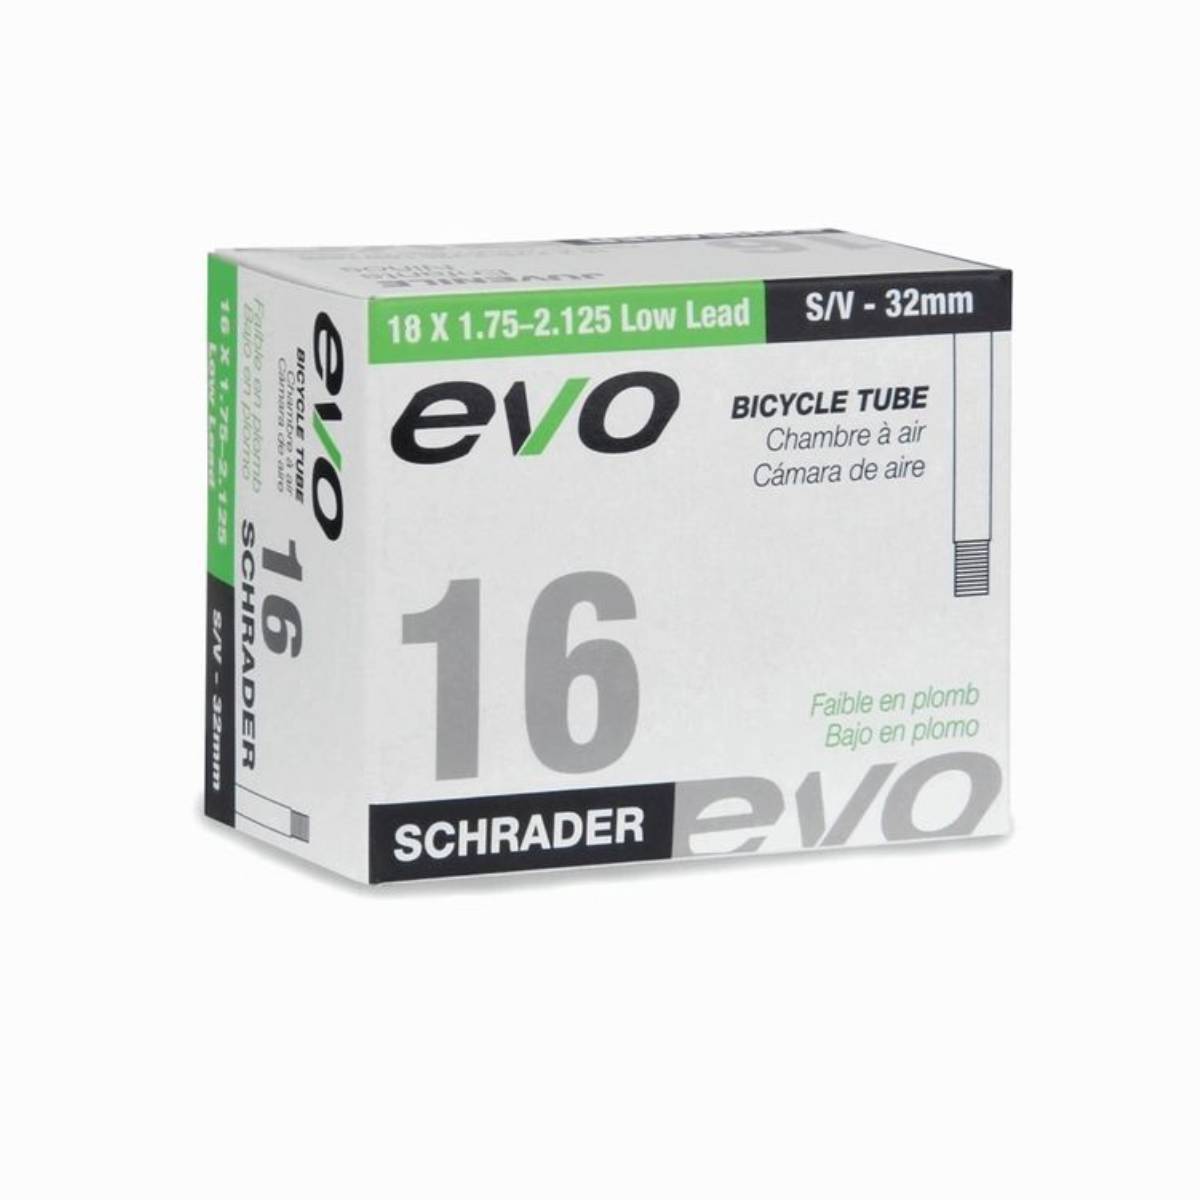 Chambre à air Evo schrader, 32mm, 18x1.75-2.125